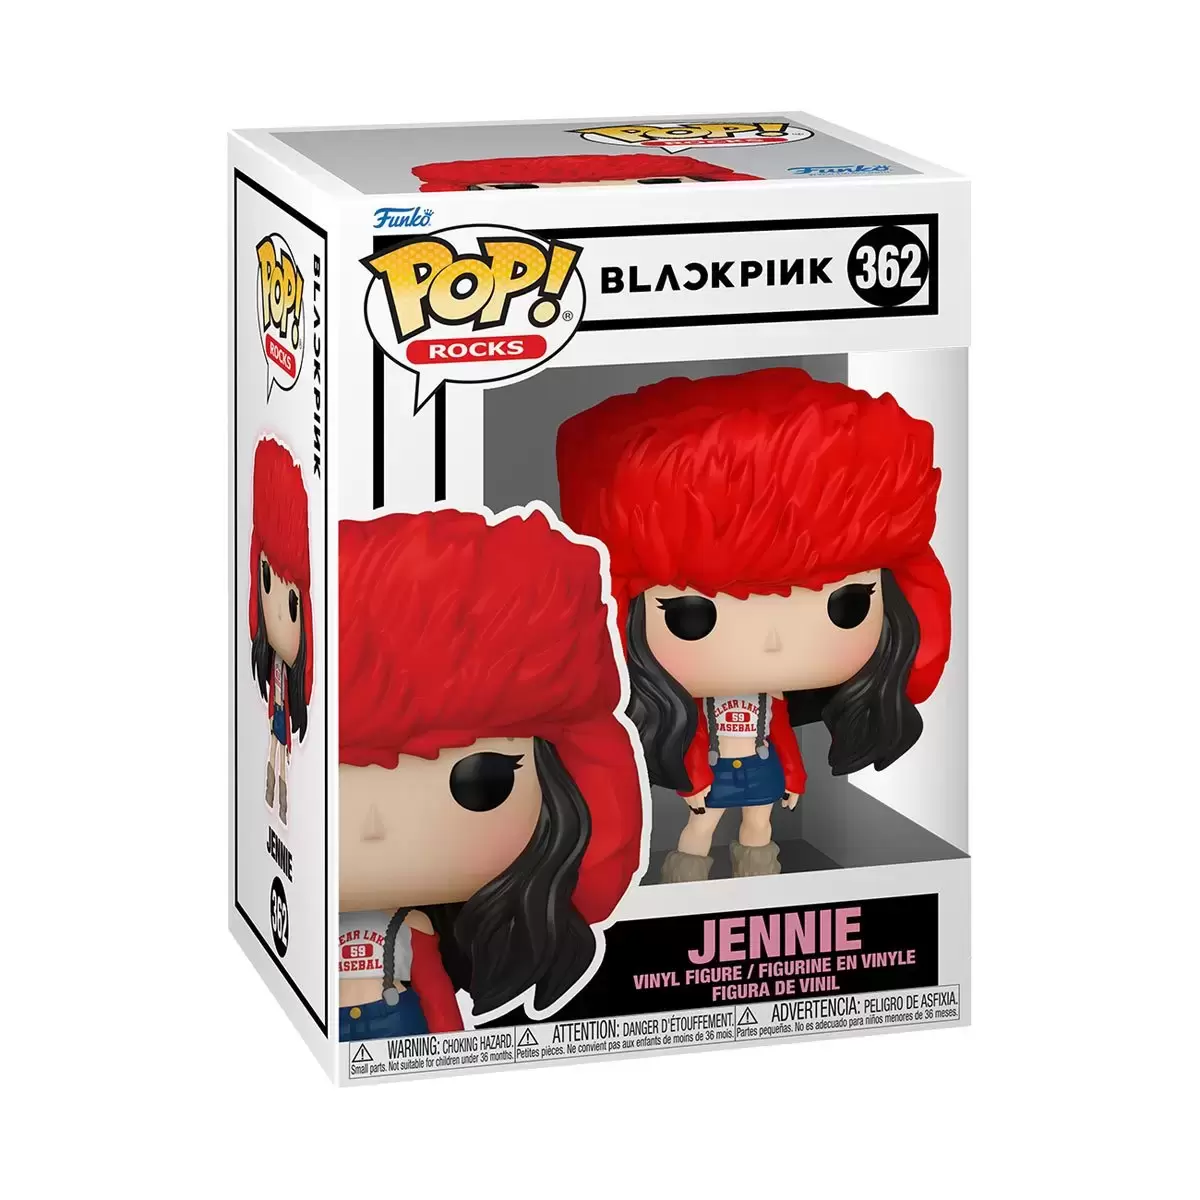 POP! Rocks - Blackpink - Jennie